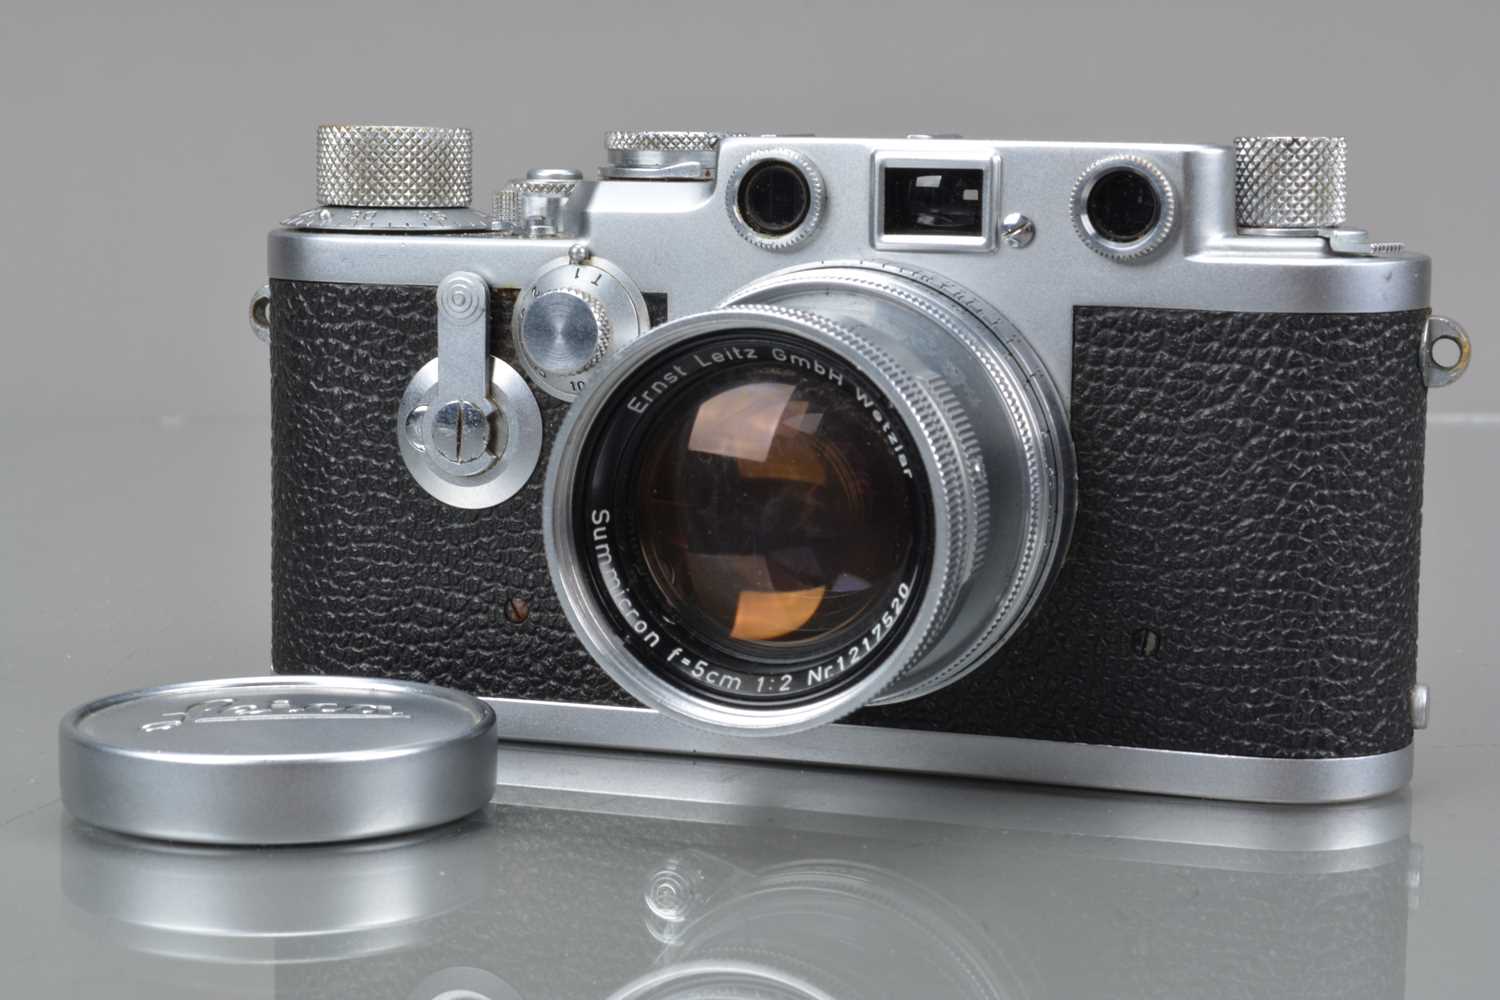 A Leitz Wetzlar Leica IIIf Rangefinder Camera,